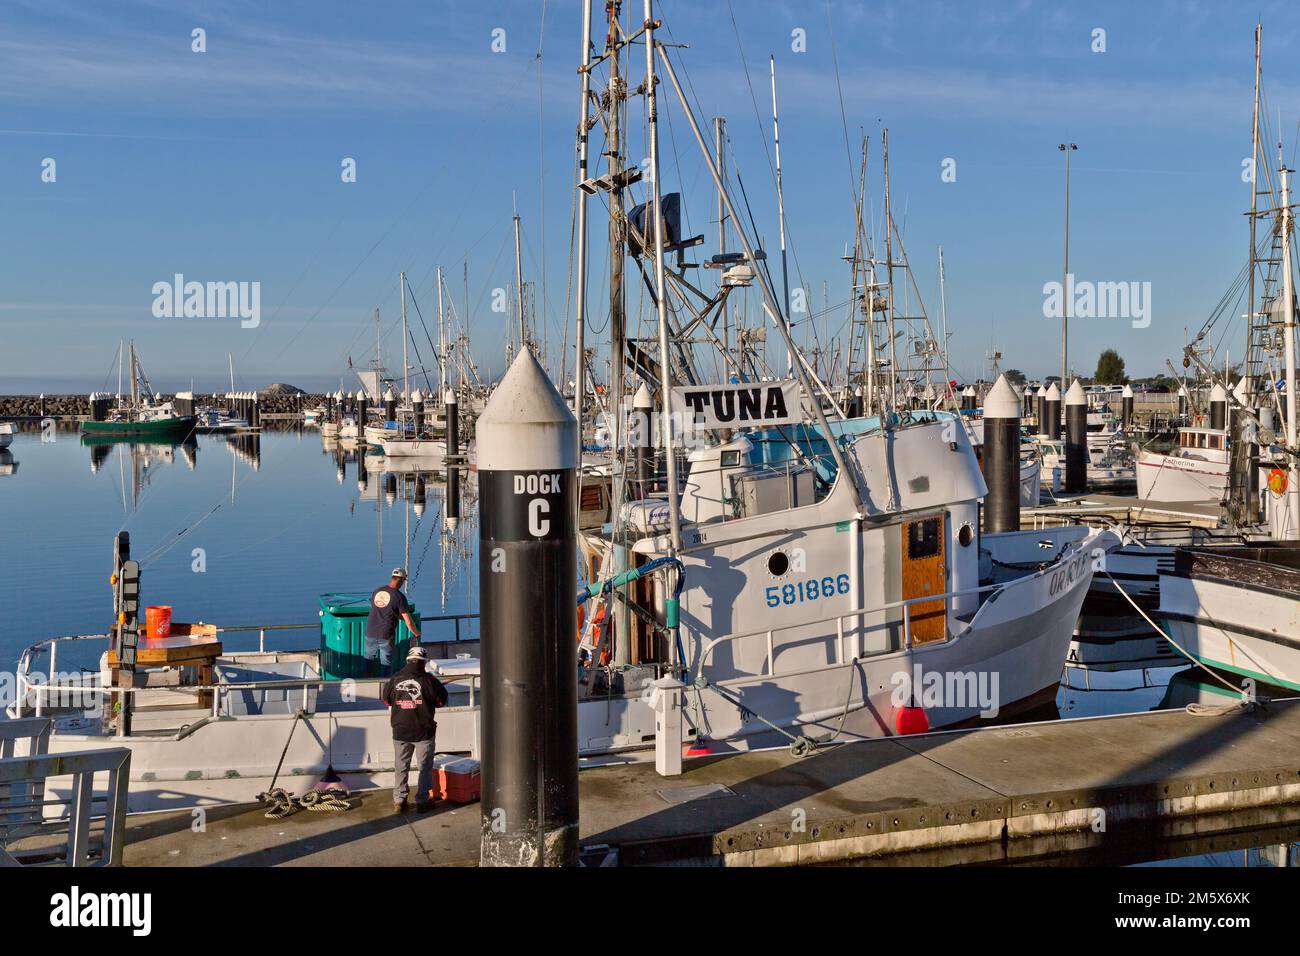 Fishing boats moored in Crescent City Harbor, Oracle dock 'C', fishermen promoting 'Tuna' for sale 'Thunnus alalunga', Albacore Tuna. Stock Photo